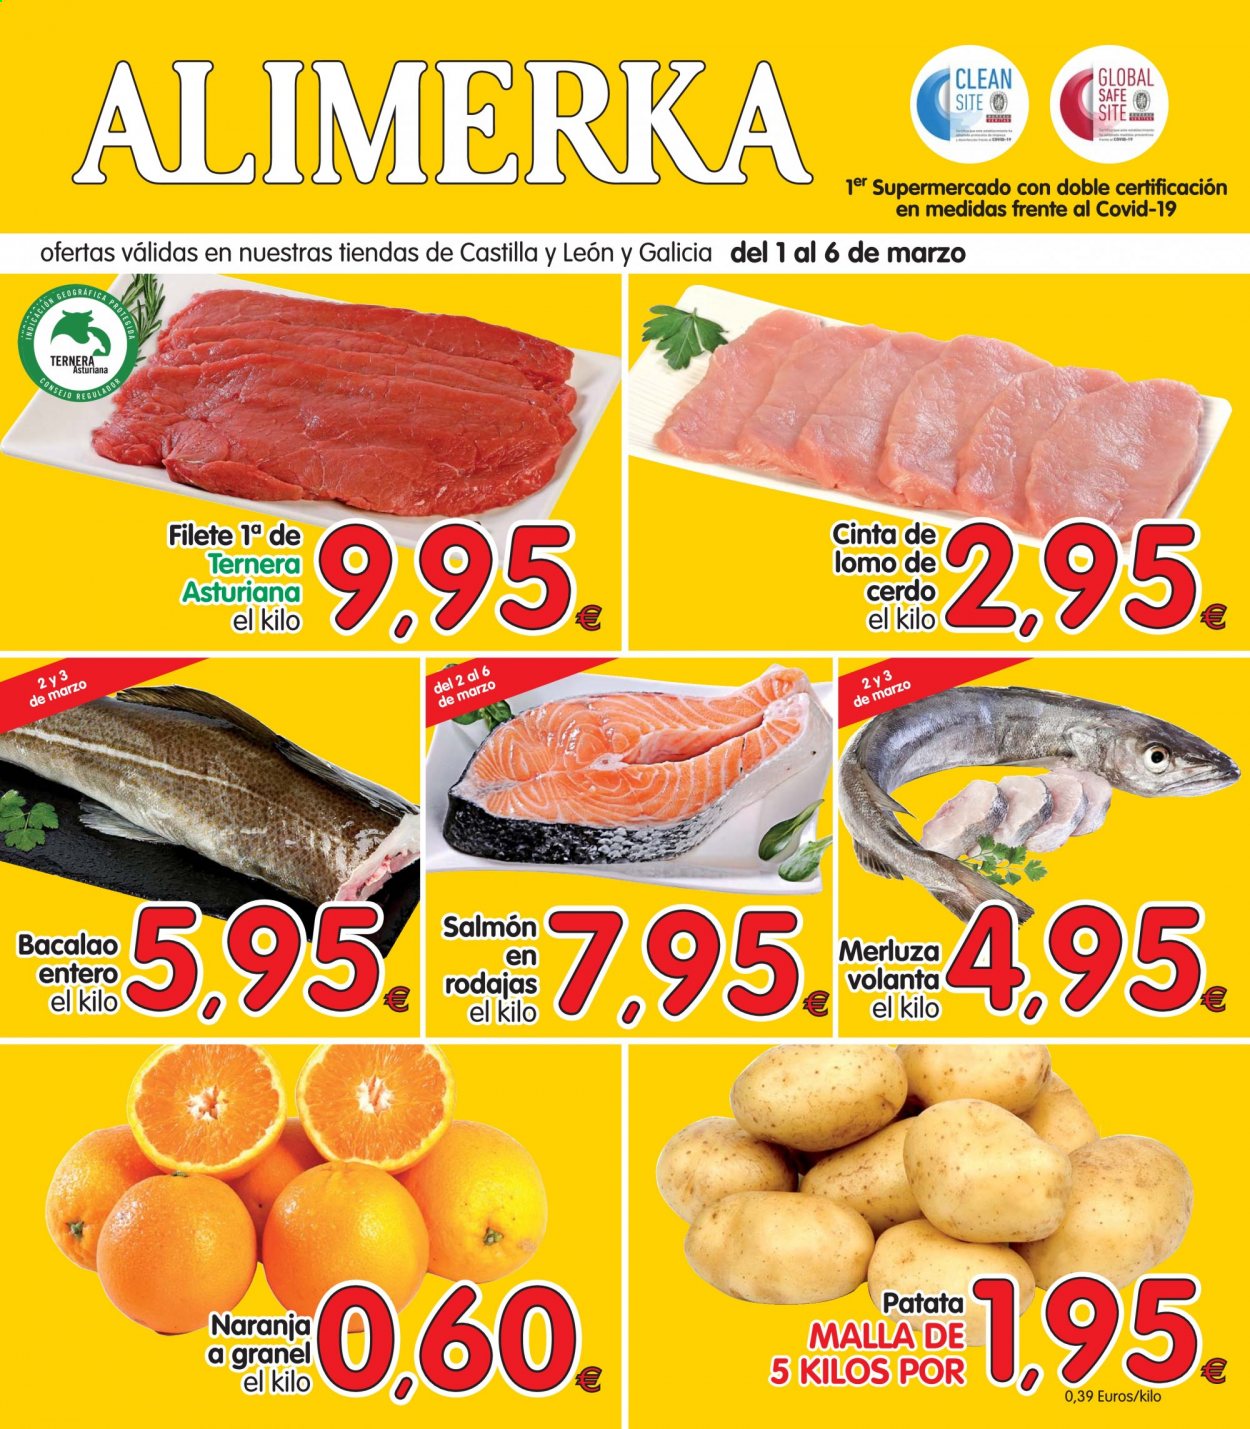 thumbnail - Folleto actual Alimerka - 01/03/21 - 06/03/21 - Ventas - lomo de cerdo, cinta de lomo, carne de ternera, naranja, patatas, merluza, bacalao, salmón. Página 1.